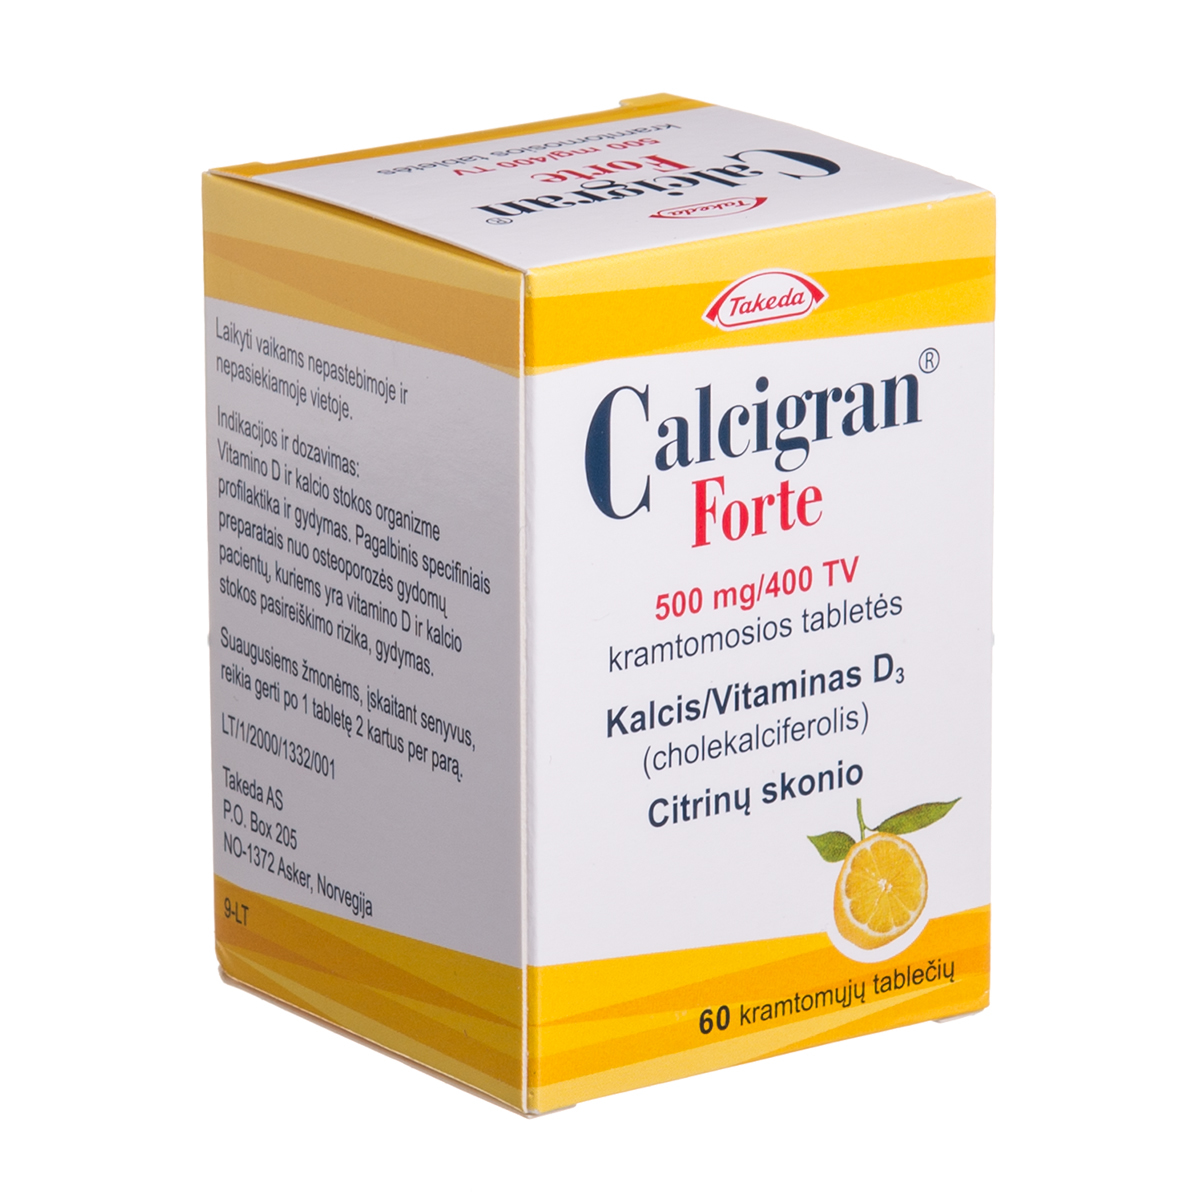 CALCIGRAN FORTE, 500 mg/400 TV, kramtomosios tabletės, N60